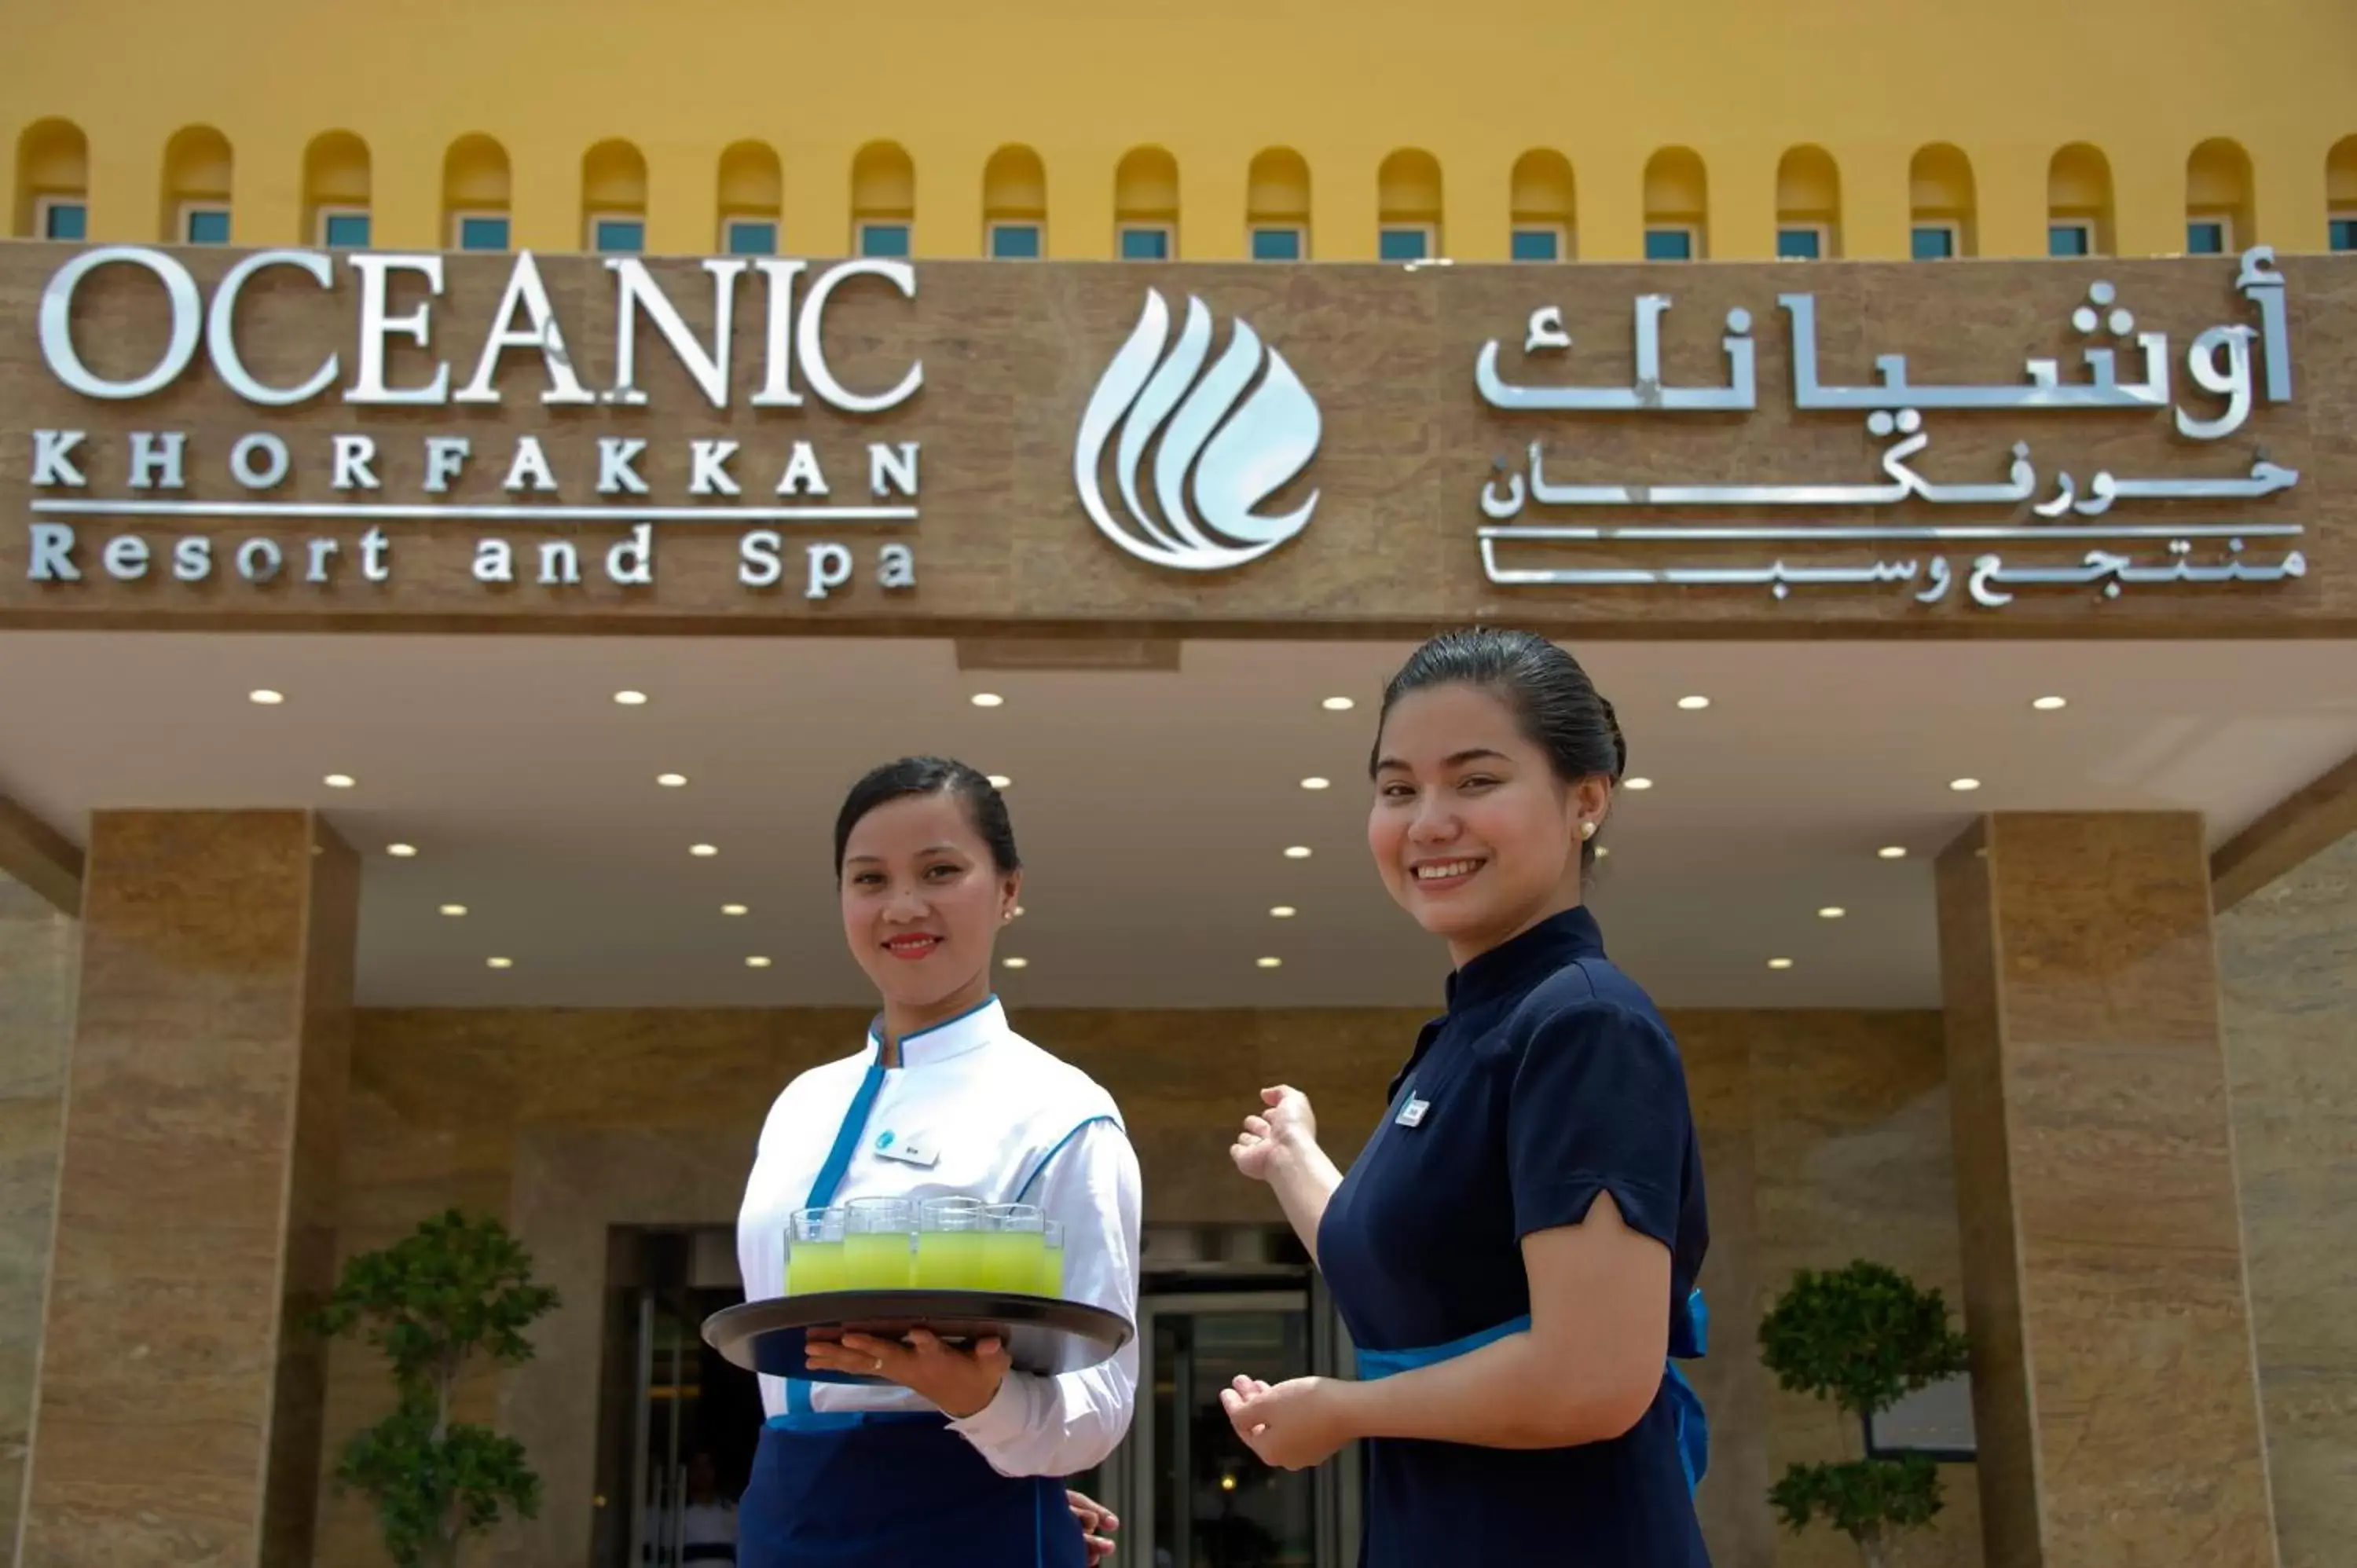 Staff in Oceanic Khorfakkan Resort & Spa